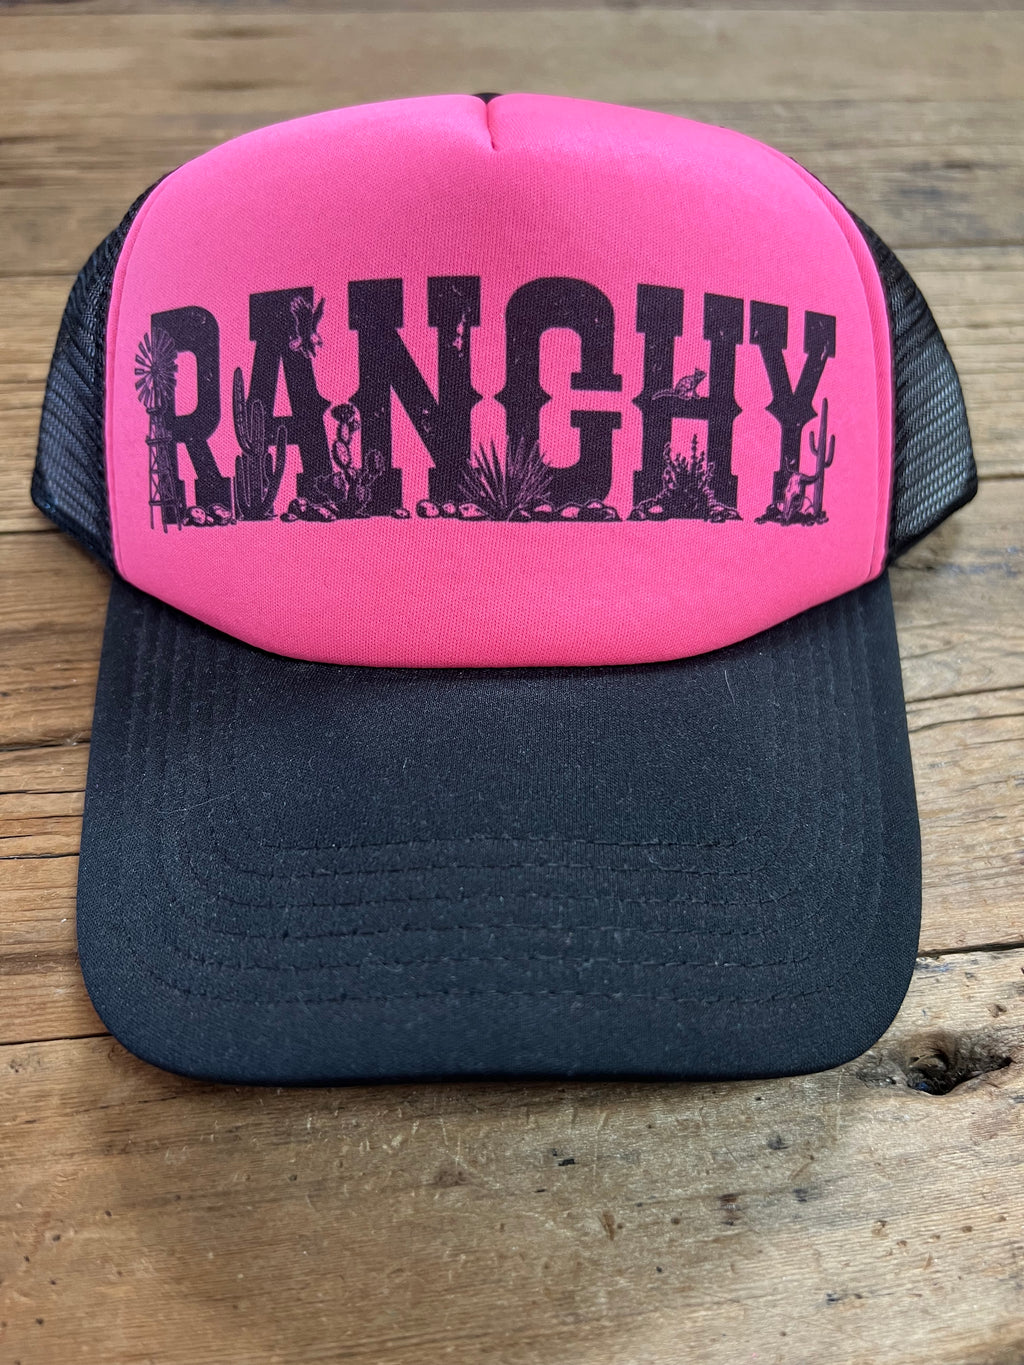 Ranchy Trucker Hat